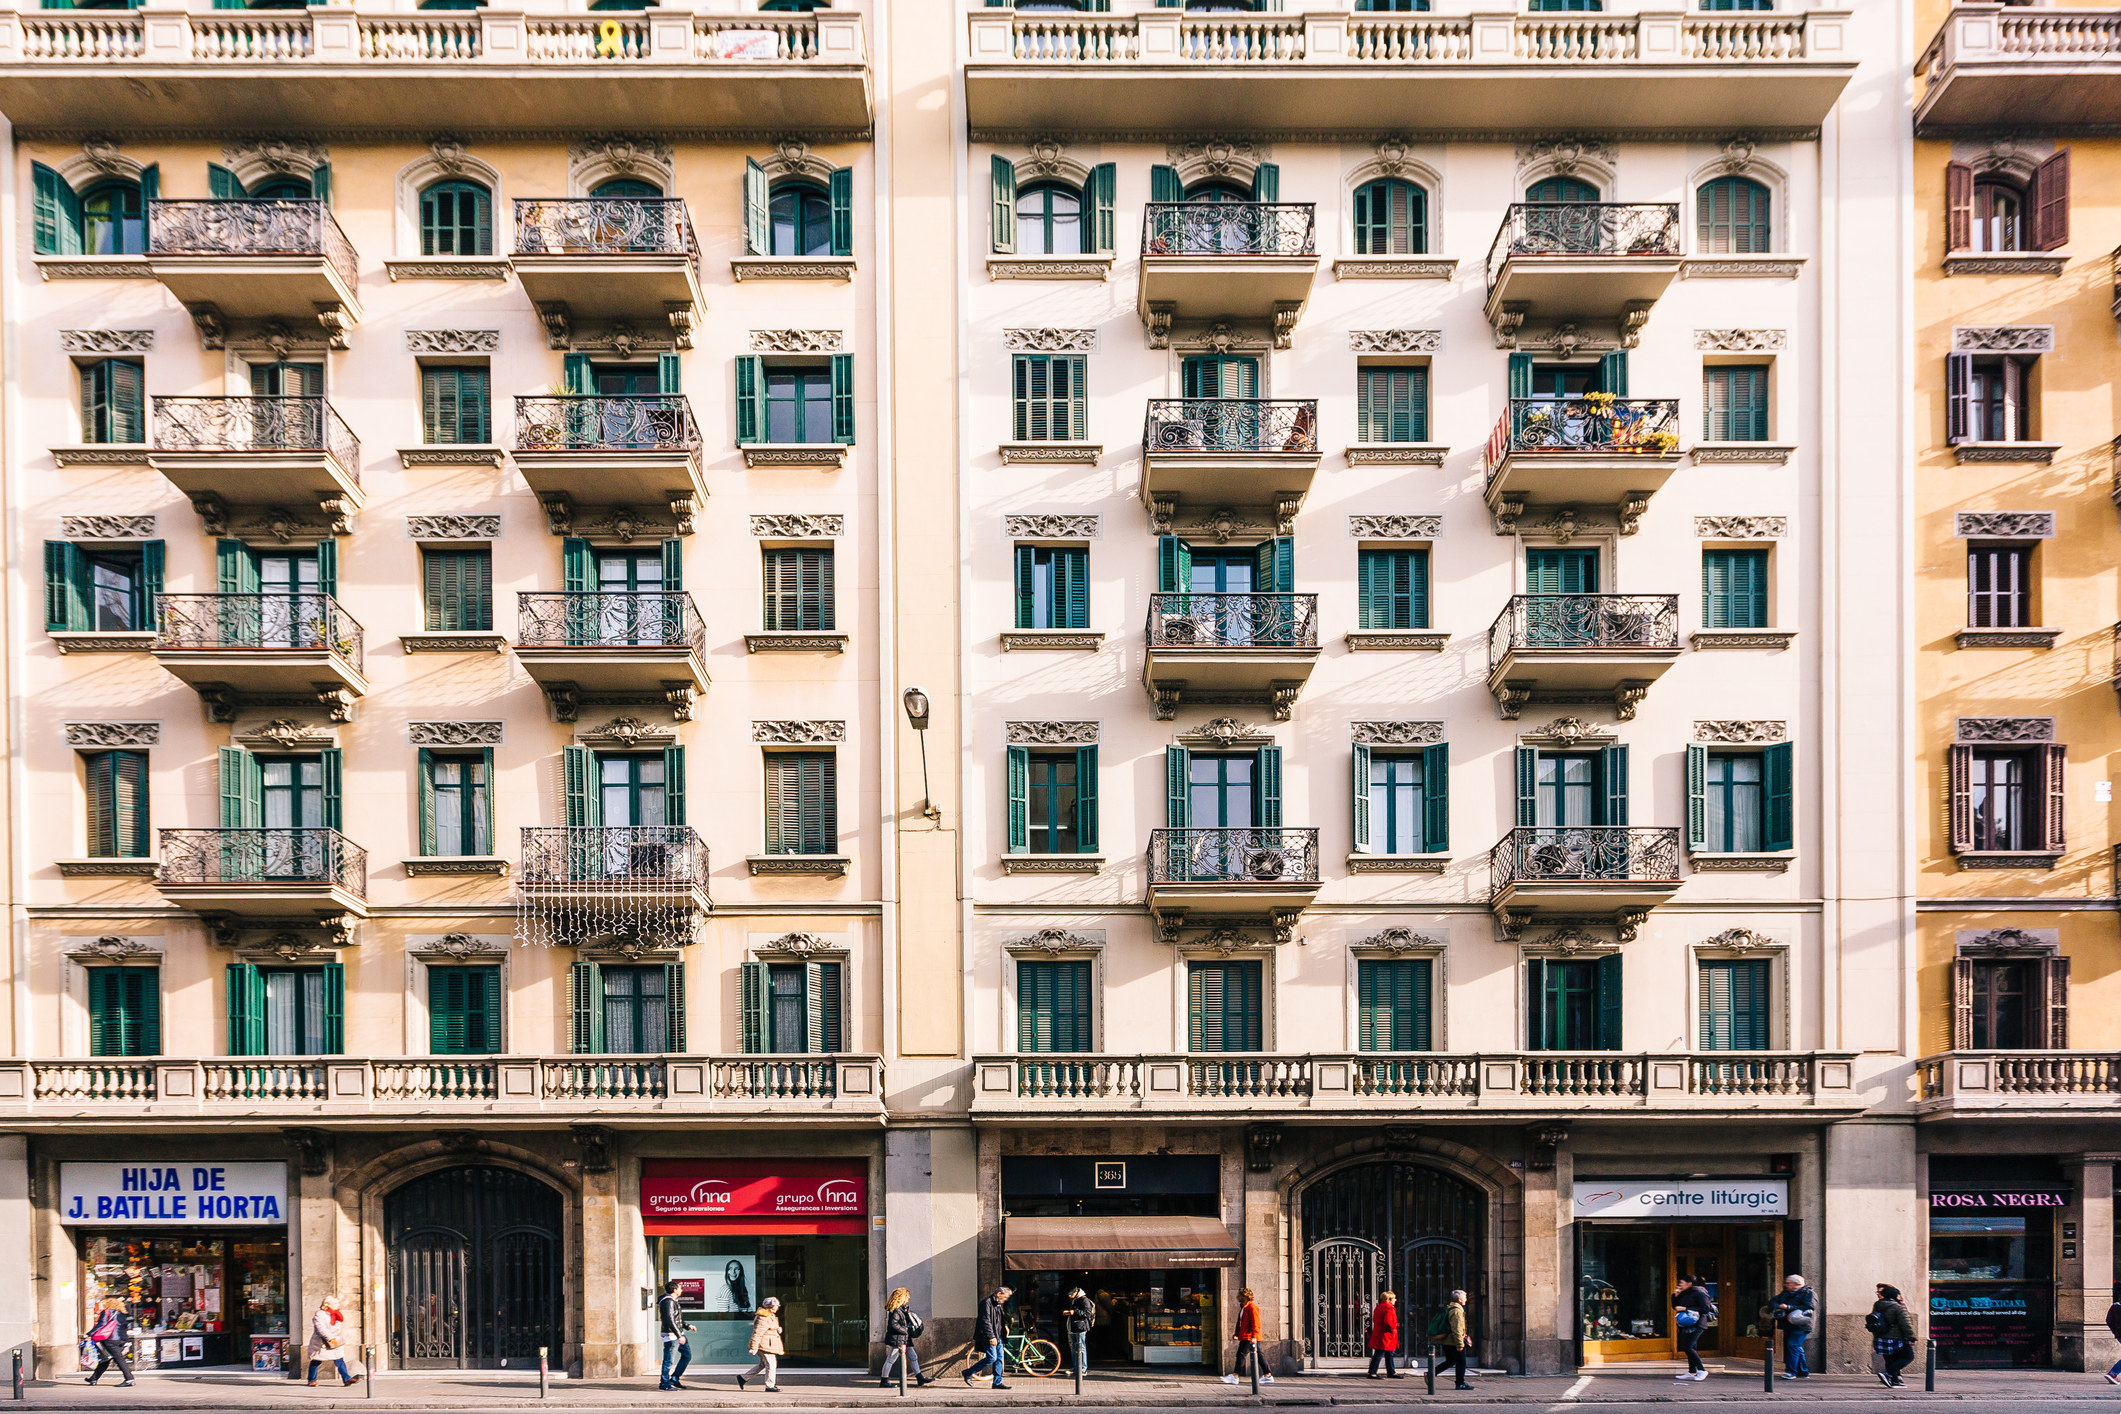 A building façade in Spain.